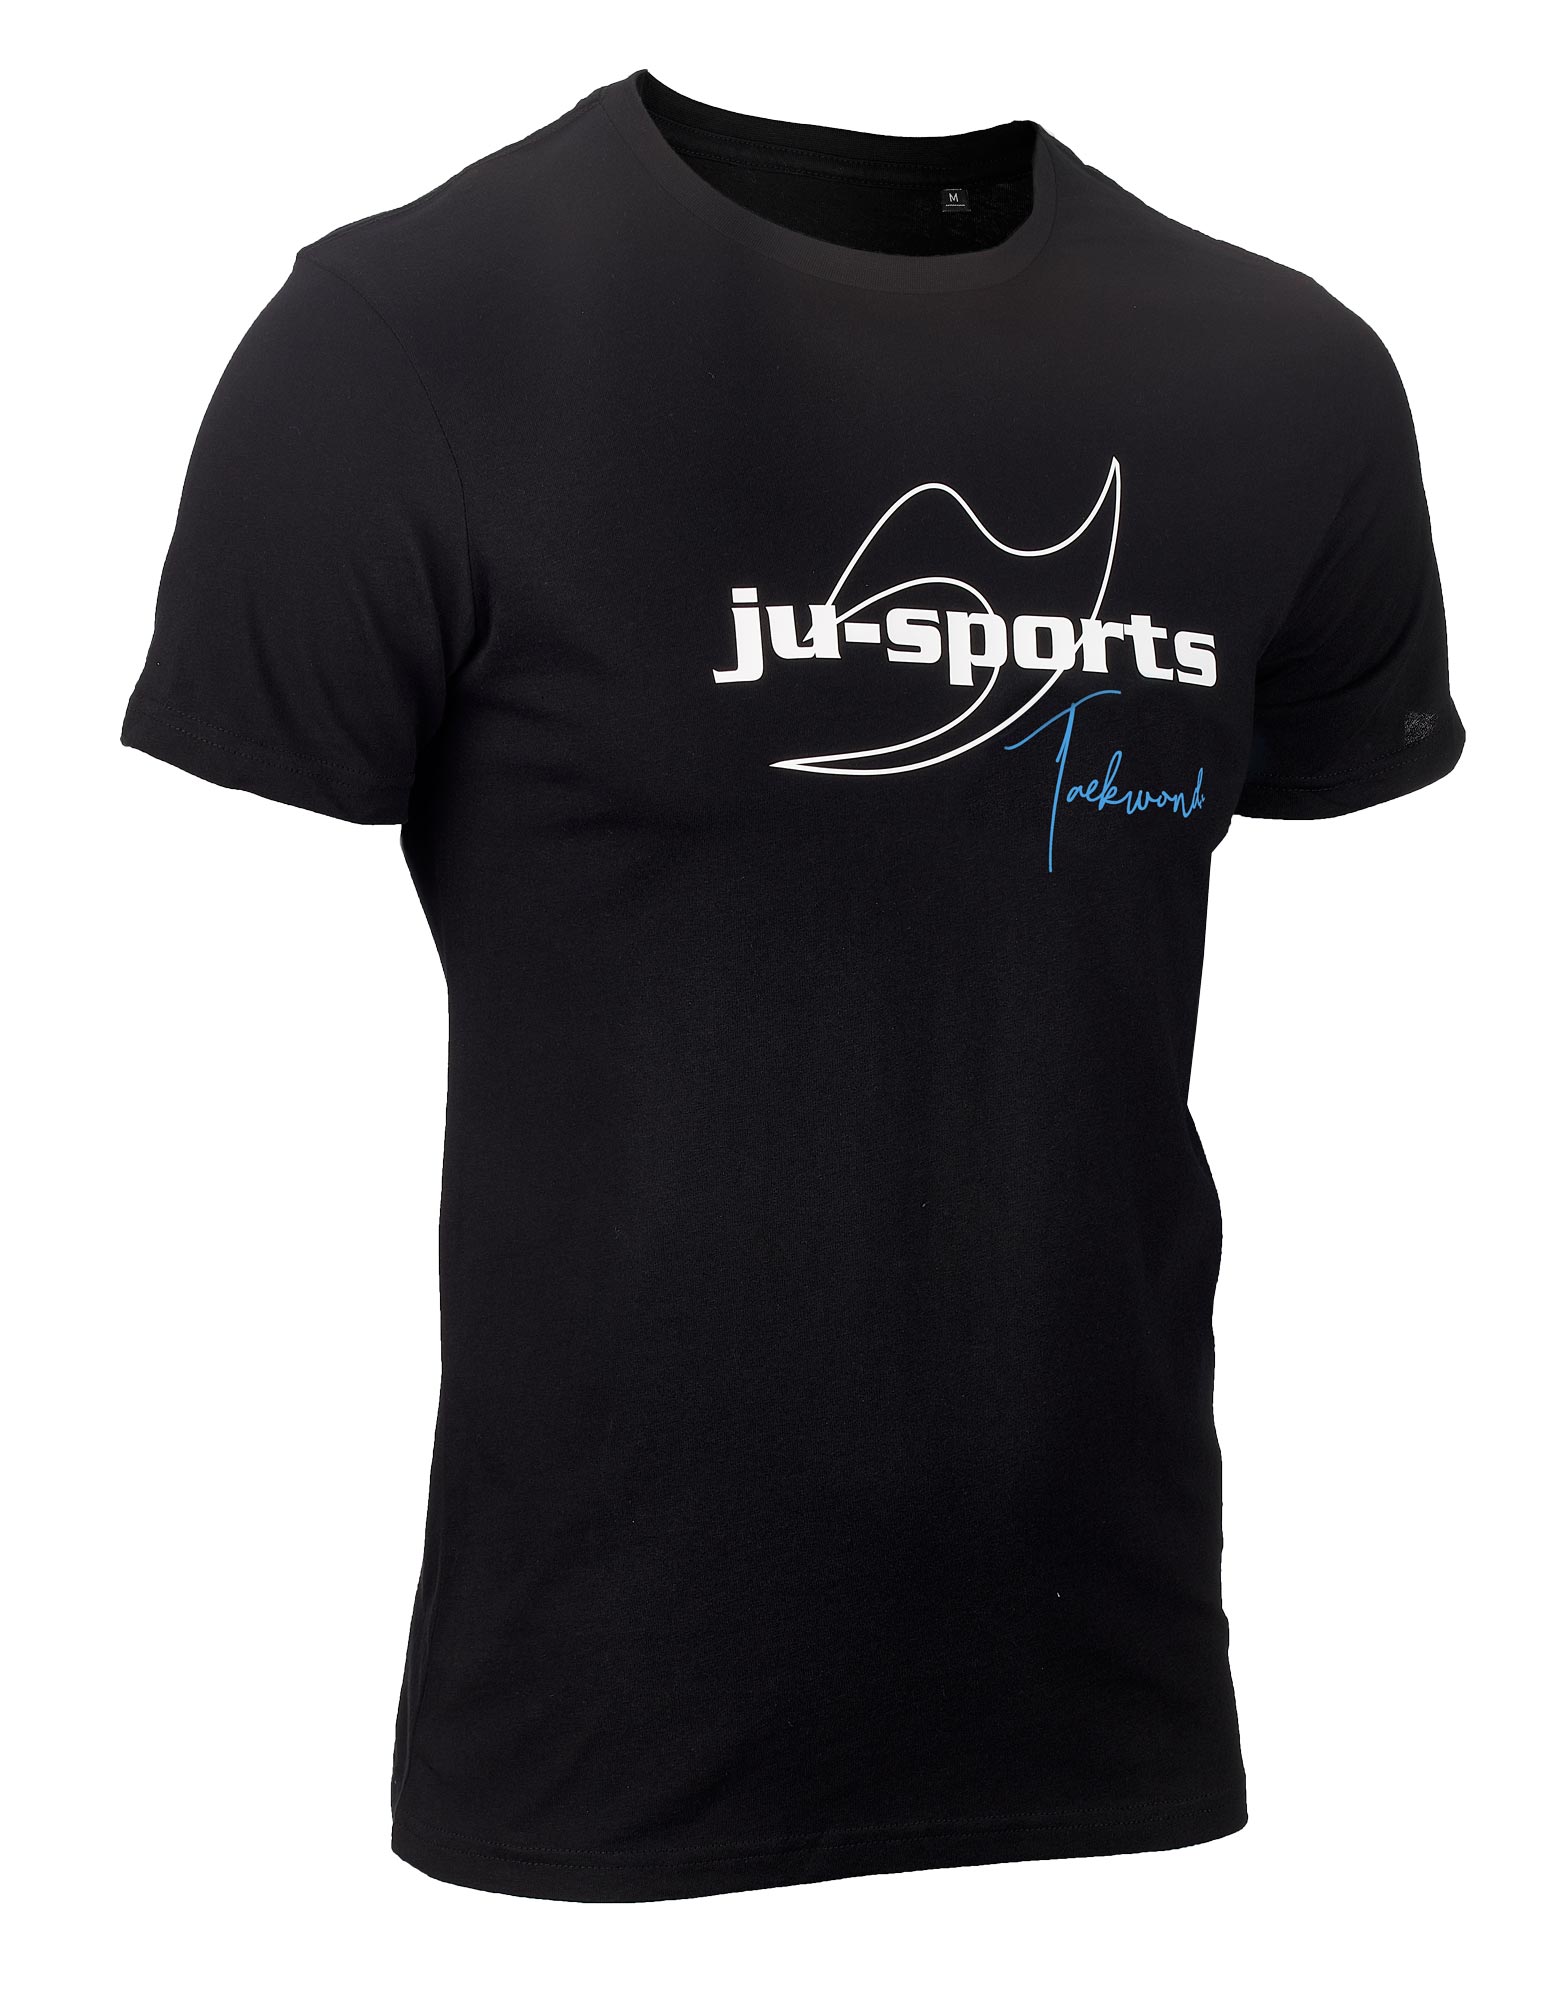 Ju-Sports Signature Line Shirt Taekwondo